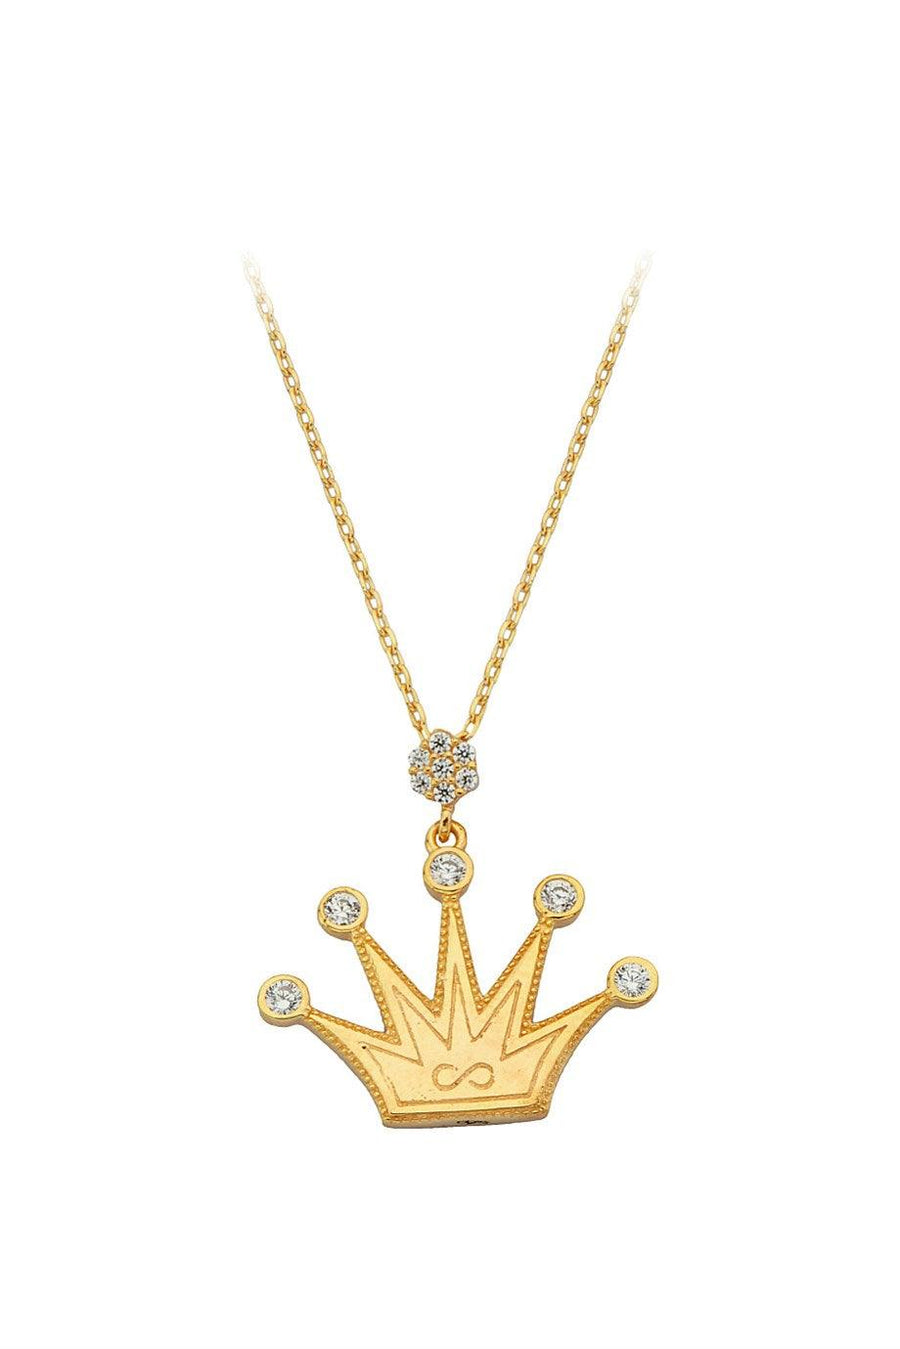 Golden Crown Necklace